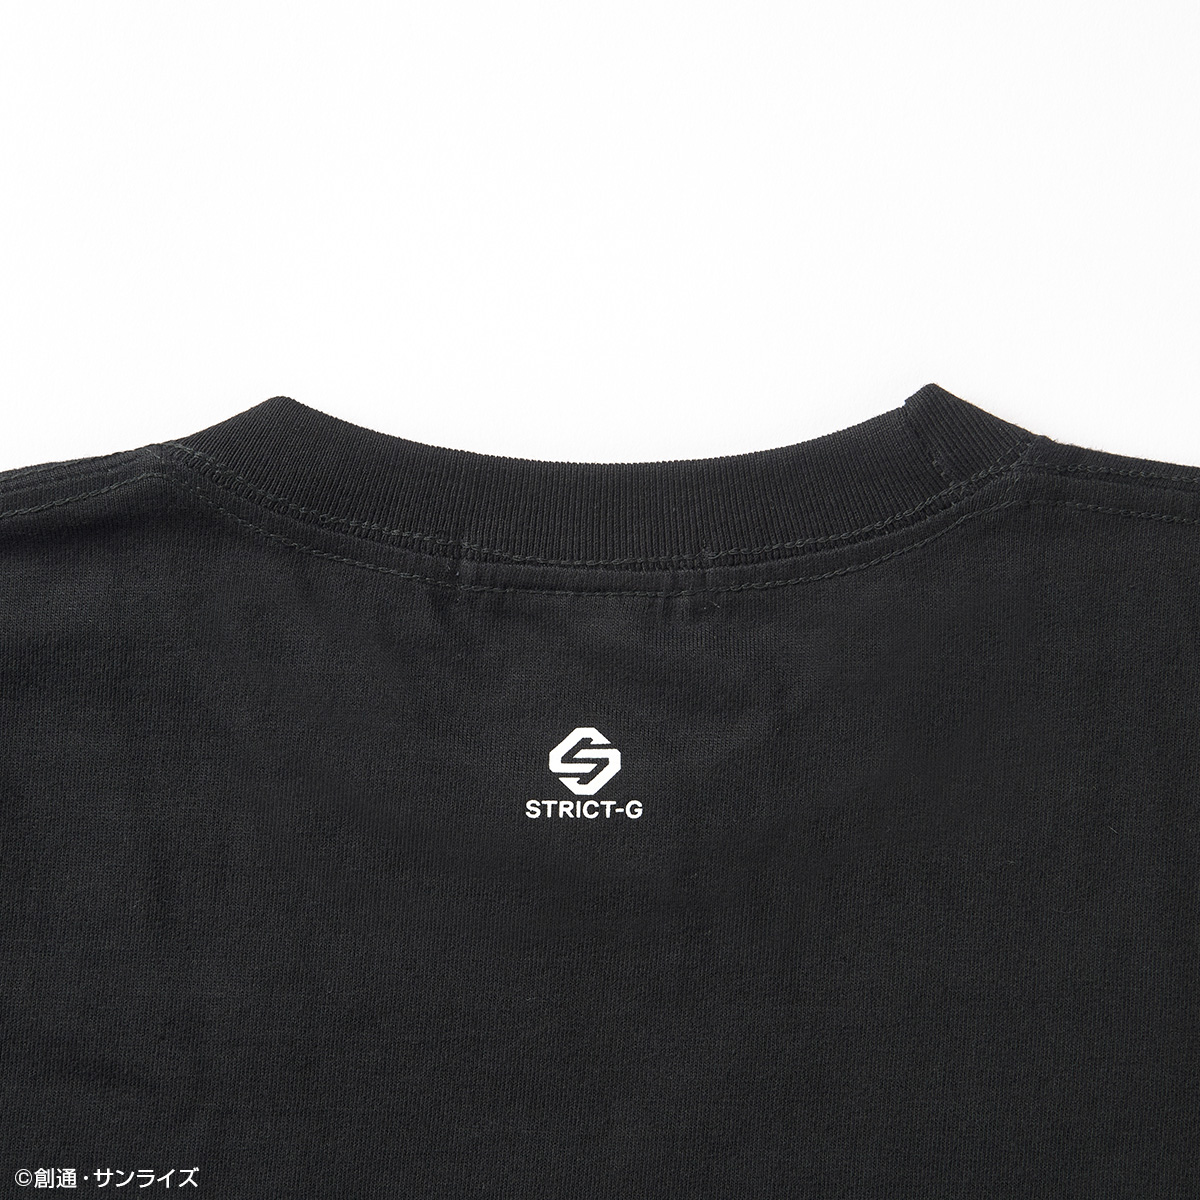 STRICT-G『機動戦士ガンダム』Tシャツコレクション CHAR AZNABLE 004